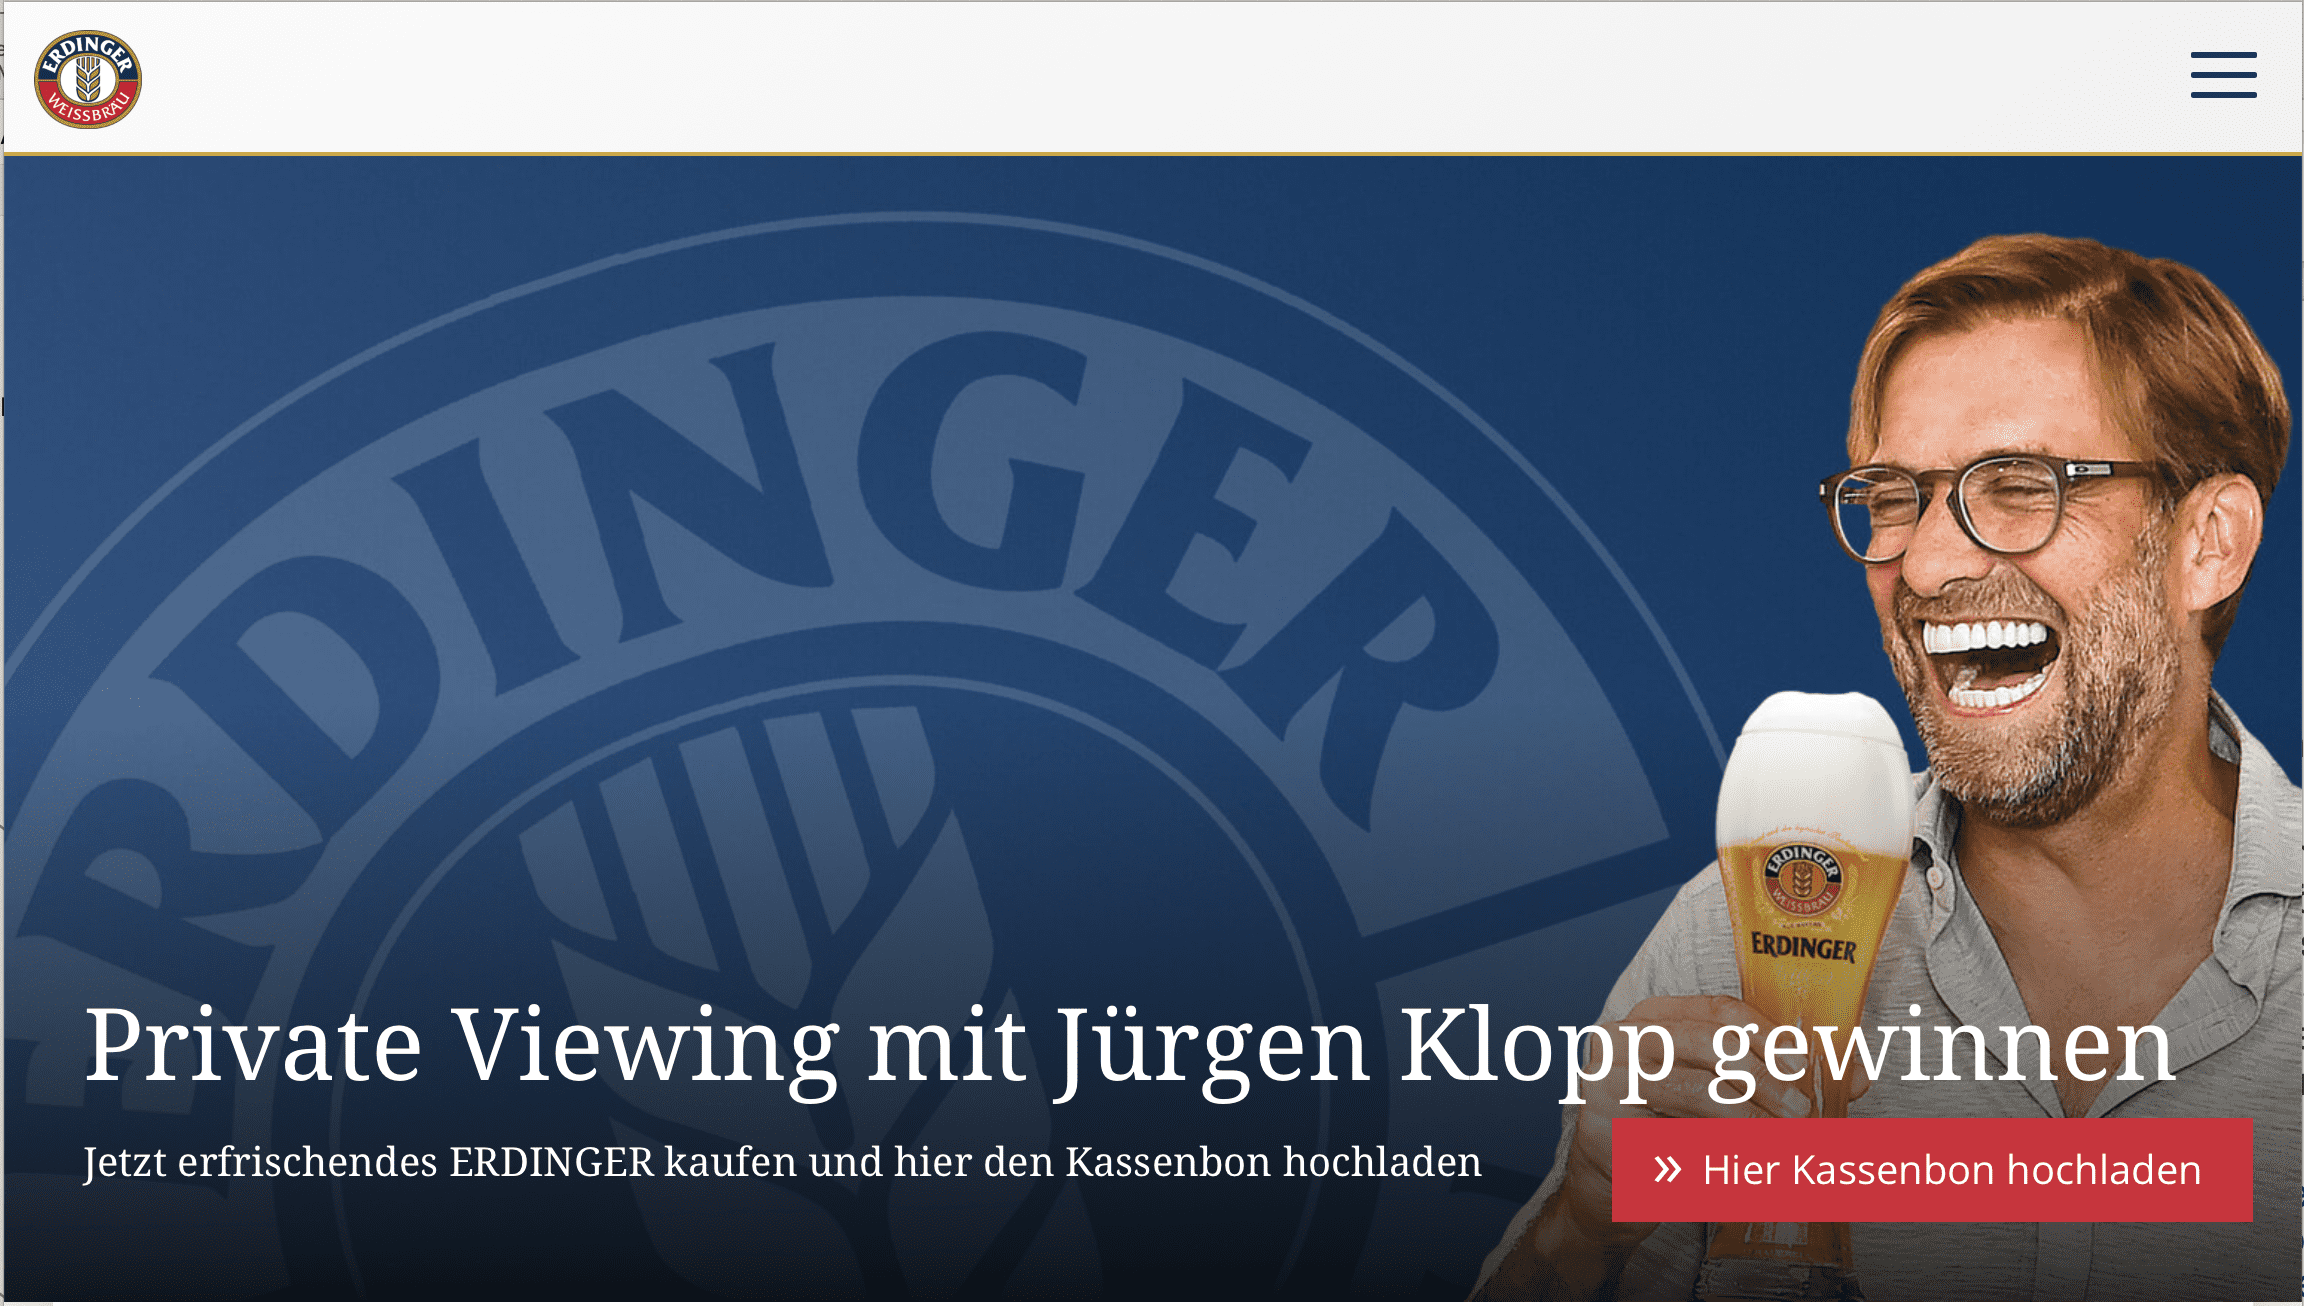 Erdinger Gewinnspiel Jürgen Klopp
Gewinnspiel-Cases FMCG Getränke